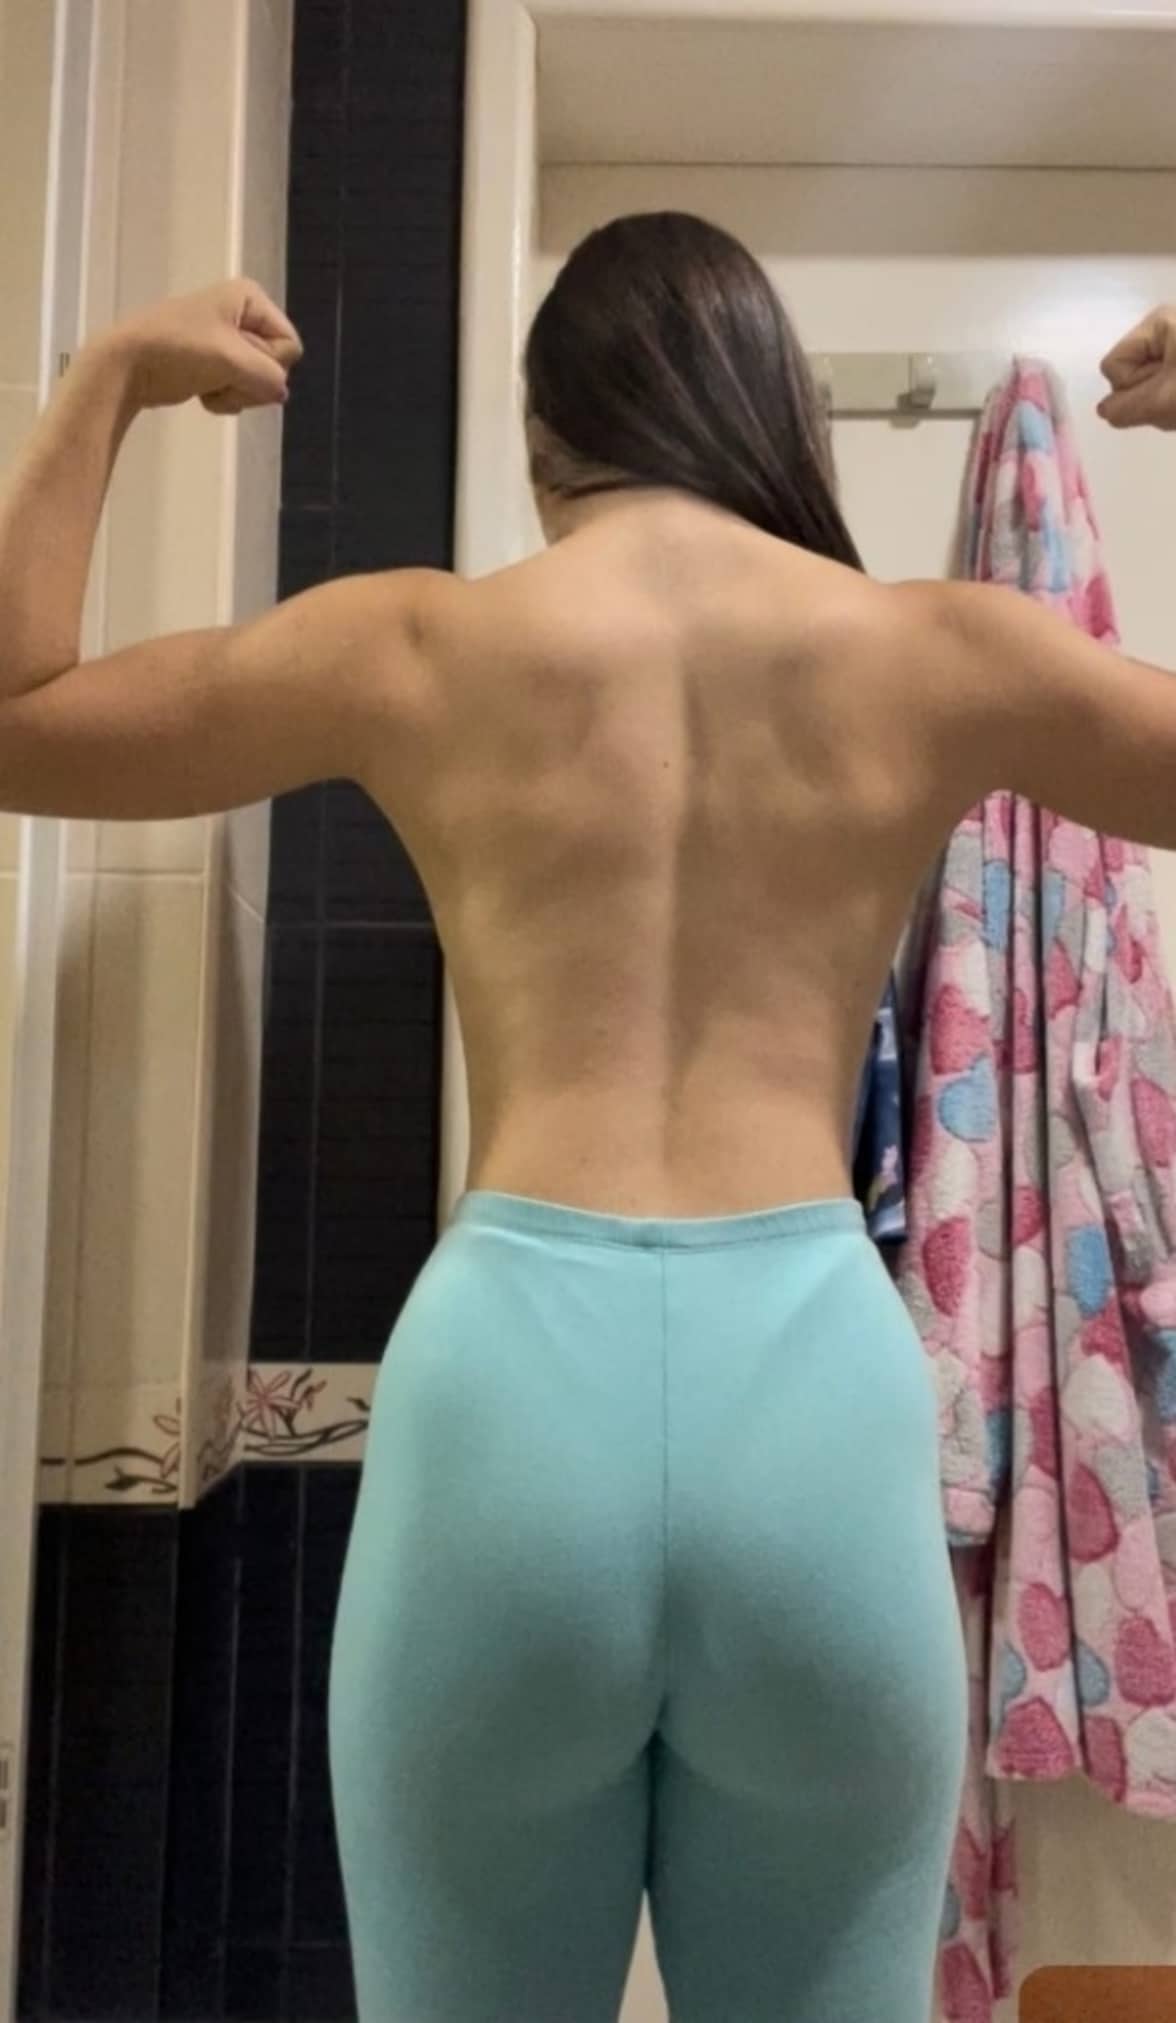 Gym girl topless back pic